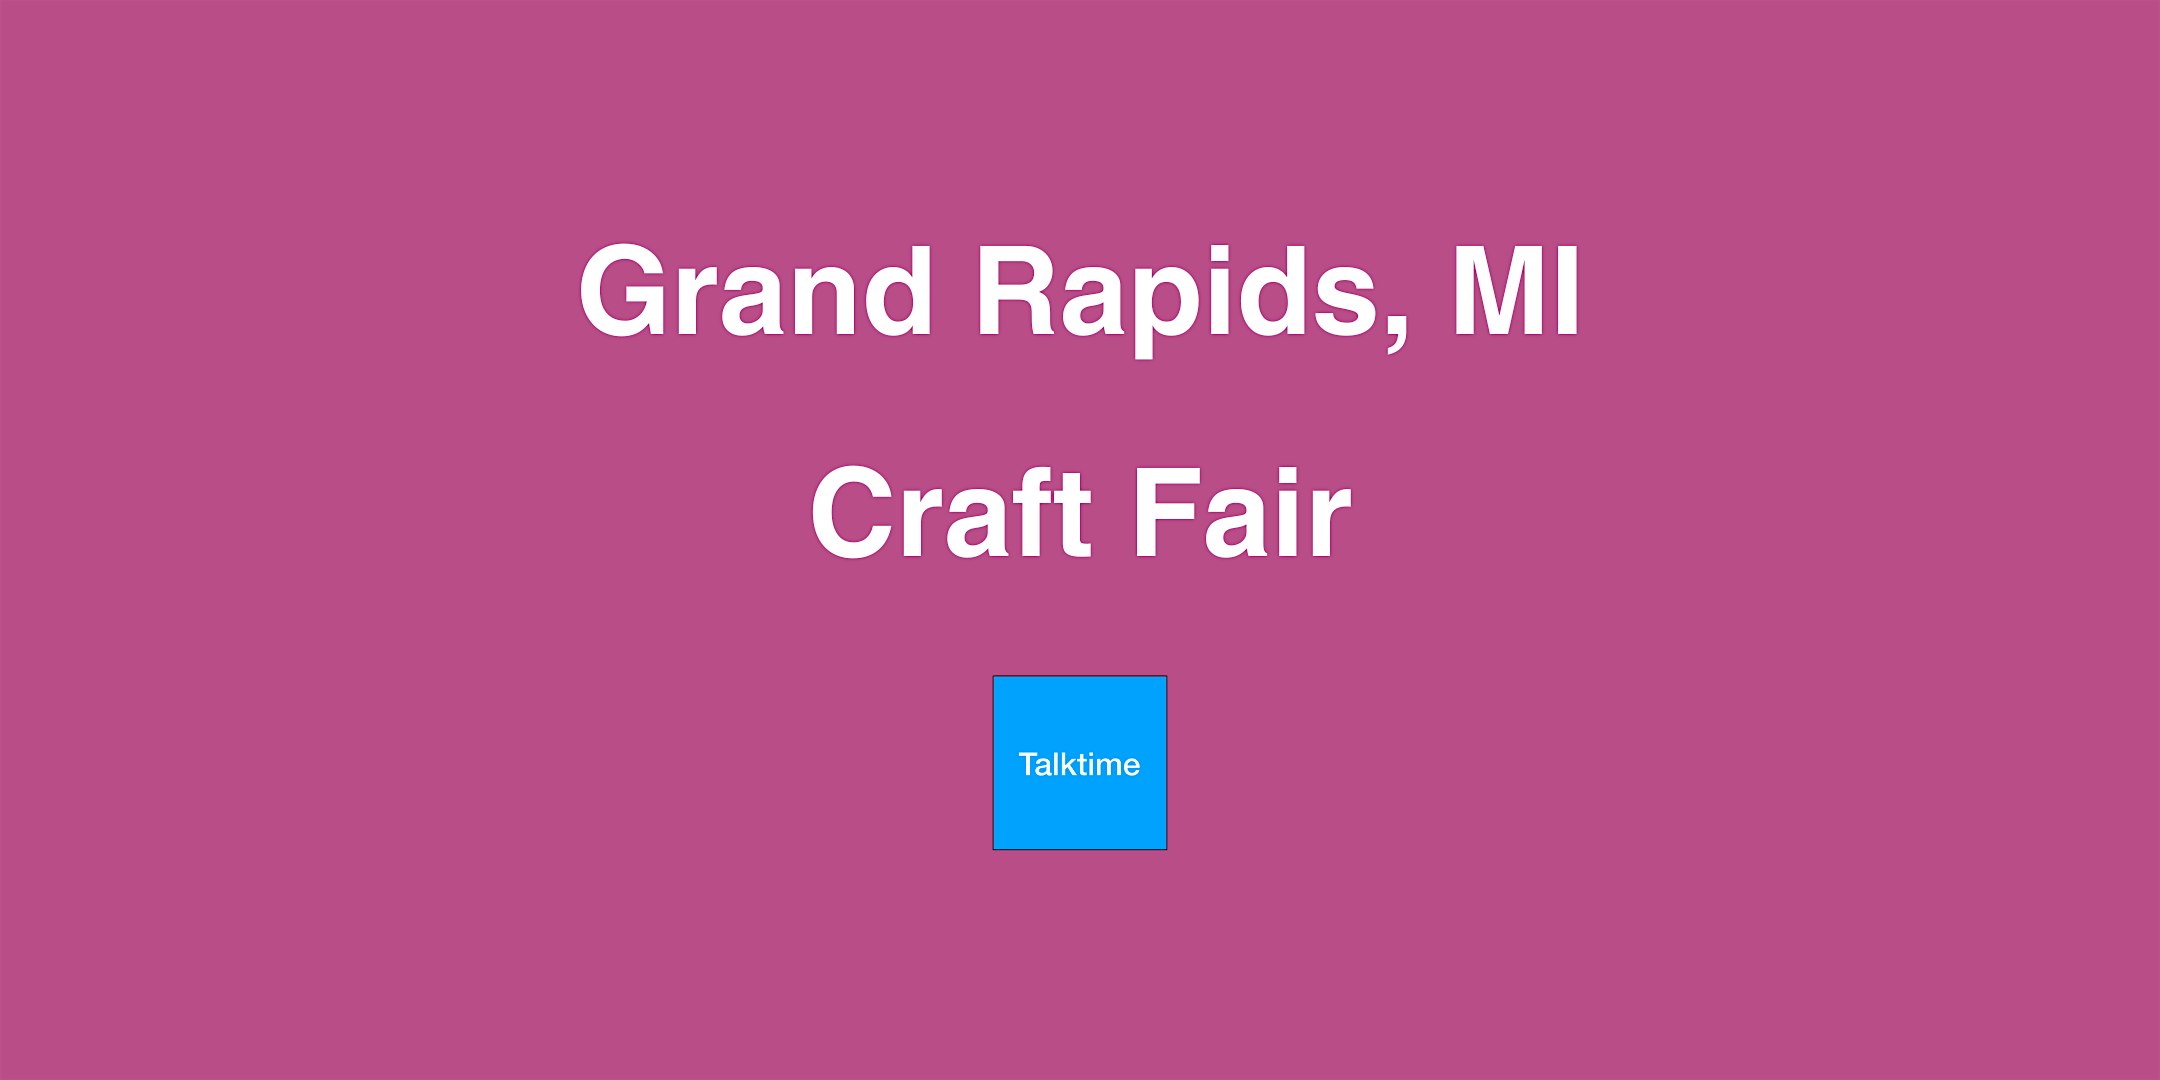 Craft Fair - Grand Rapids